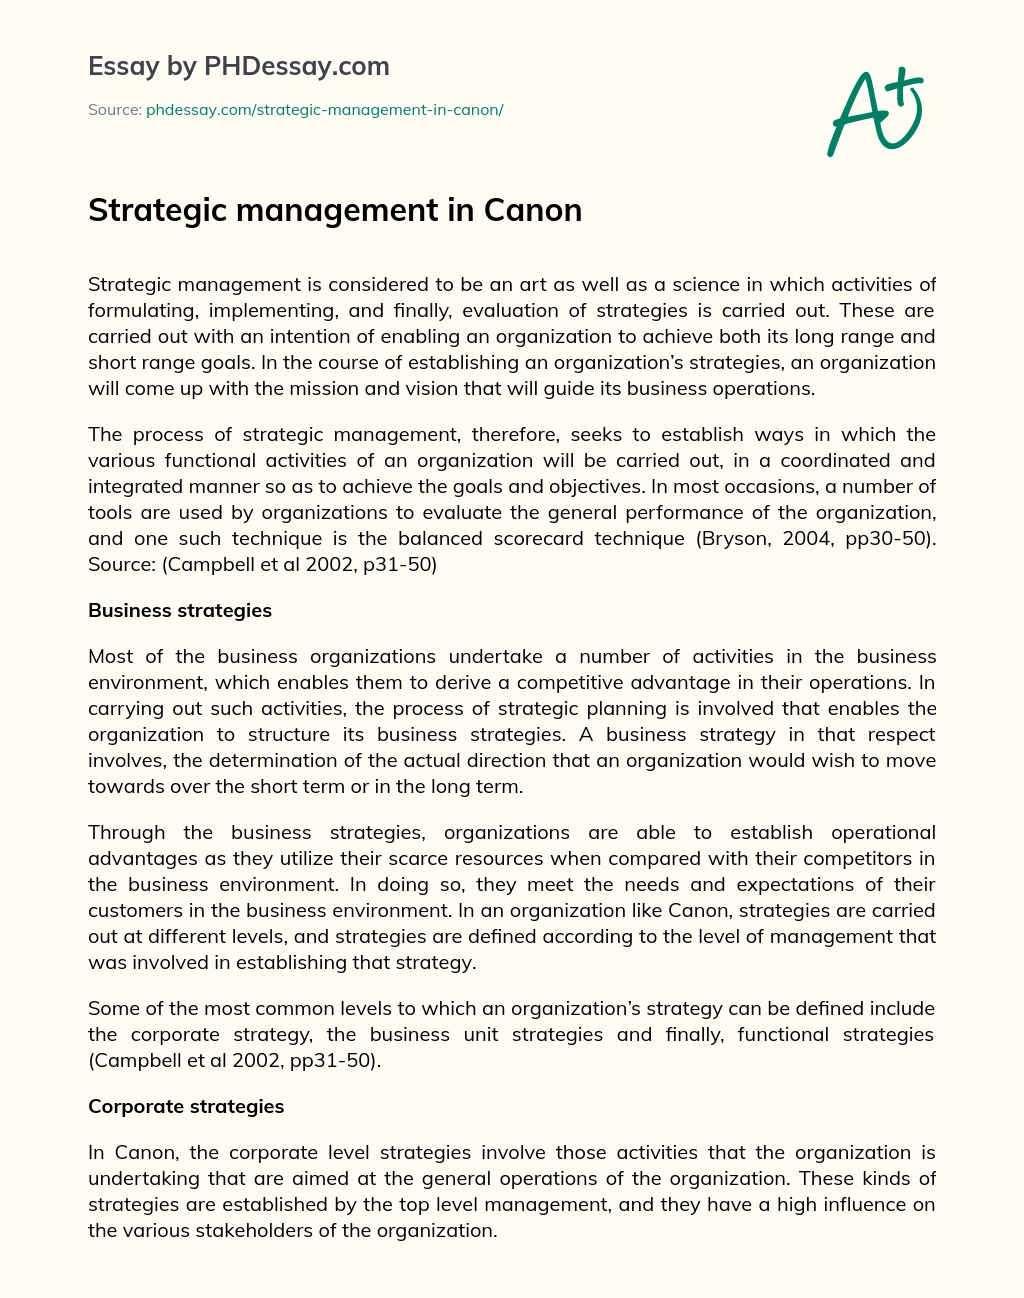 Strategic management in Canon essay